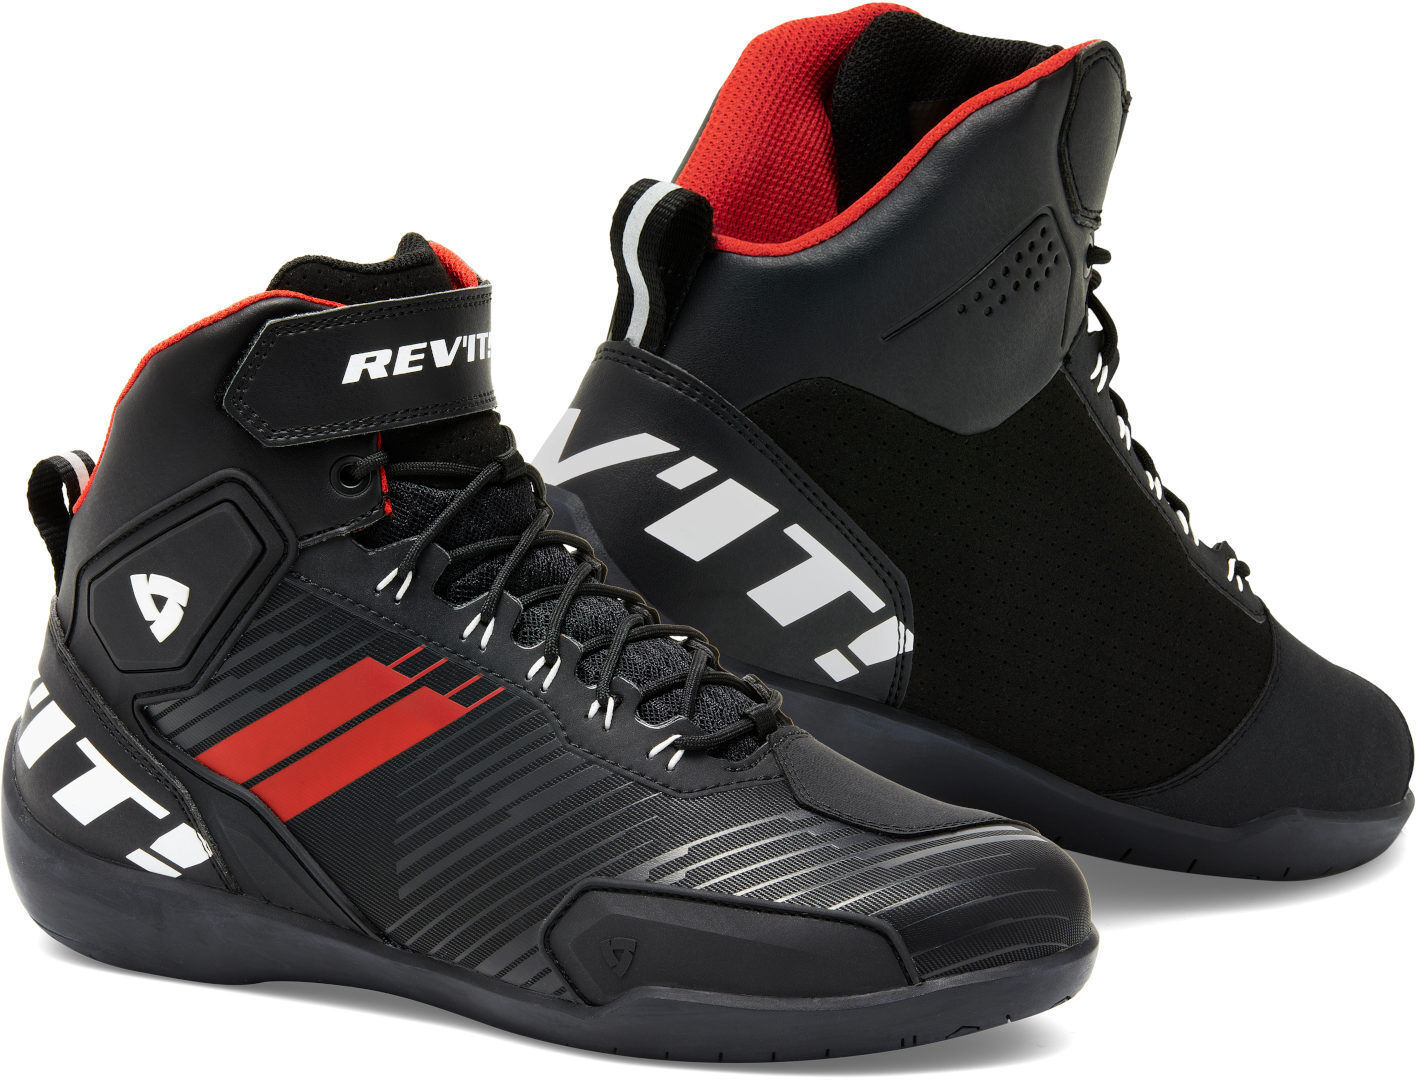 Revit G-Force Zapatos de motocicleta - Negro Blanco Rojo (47)